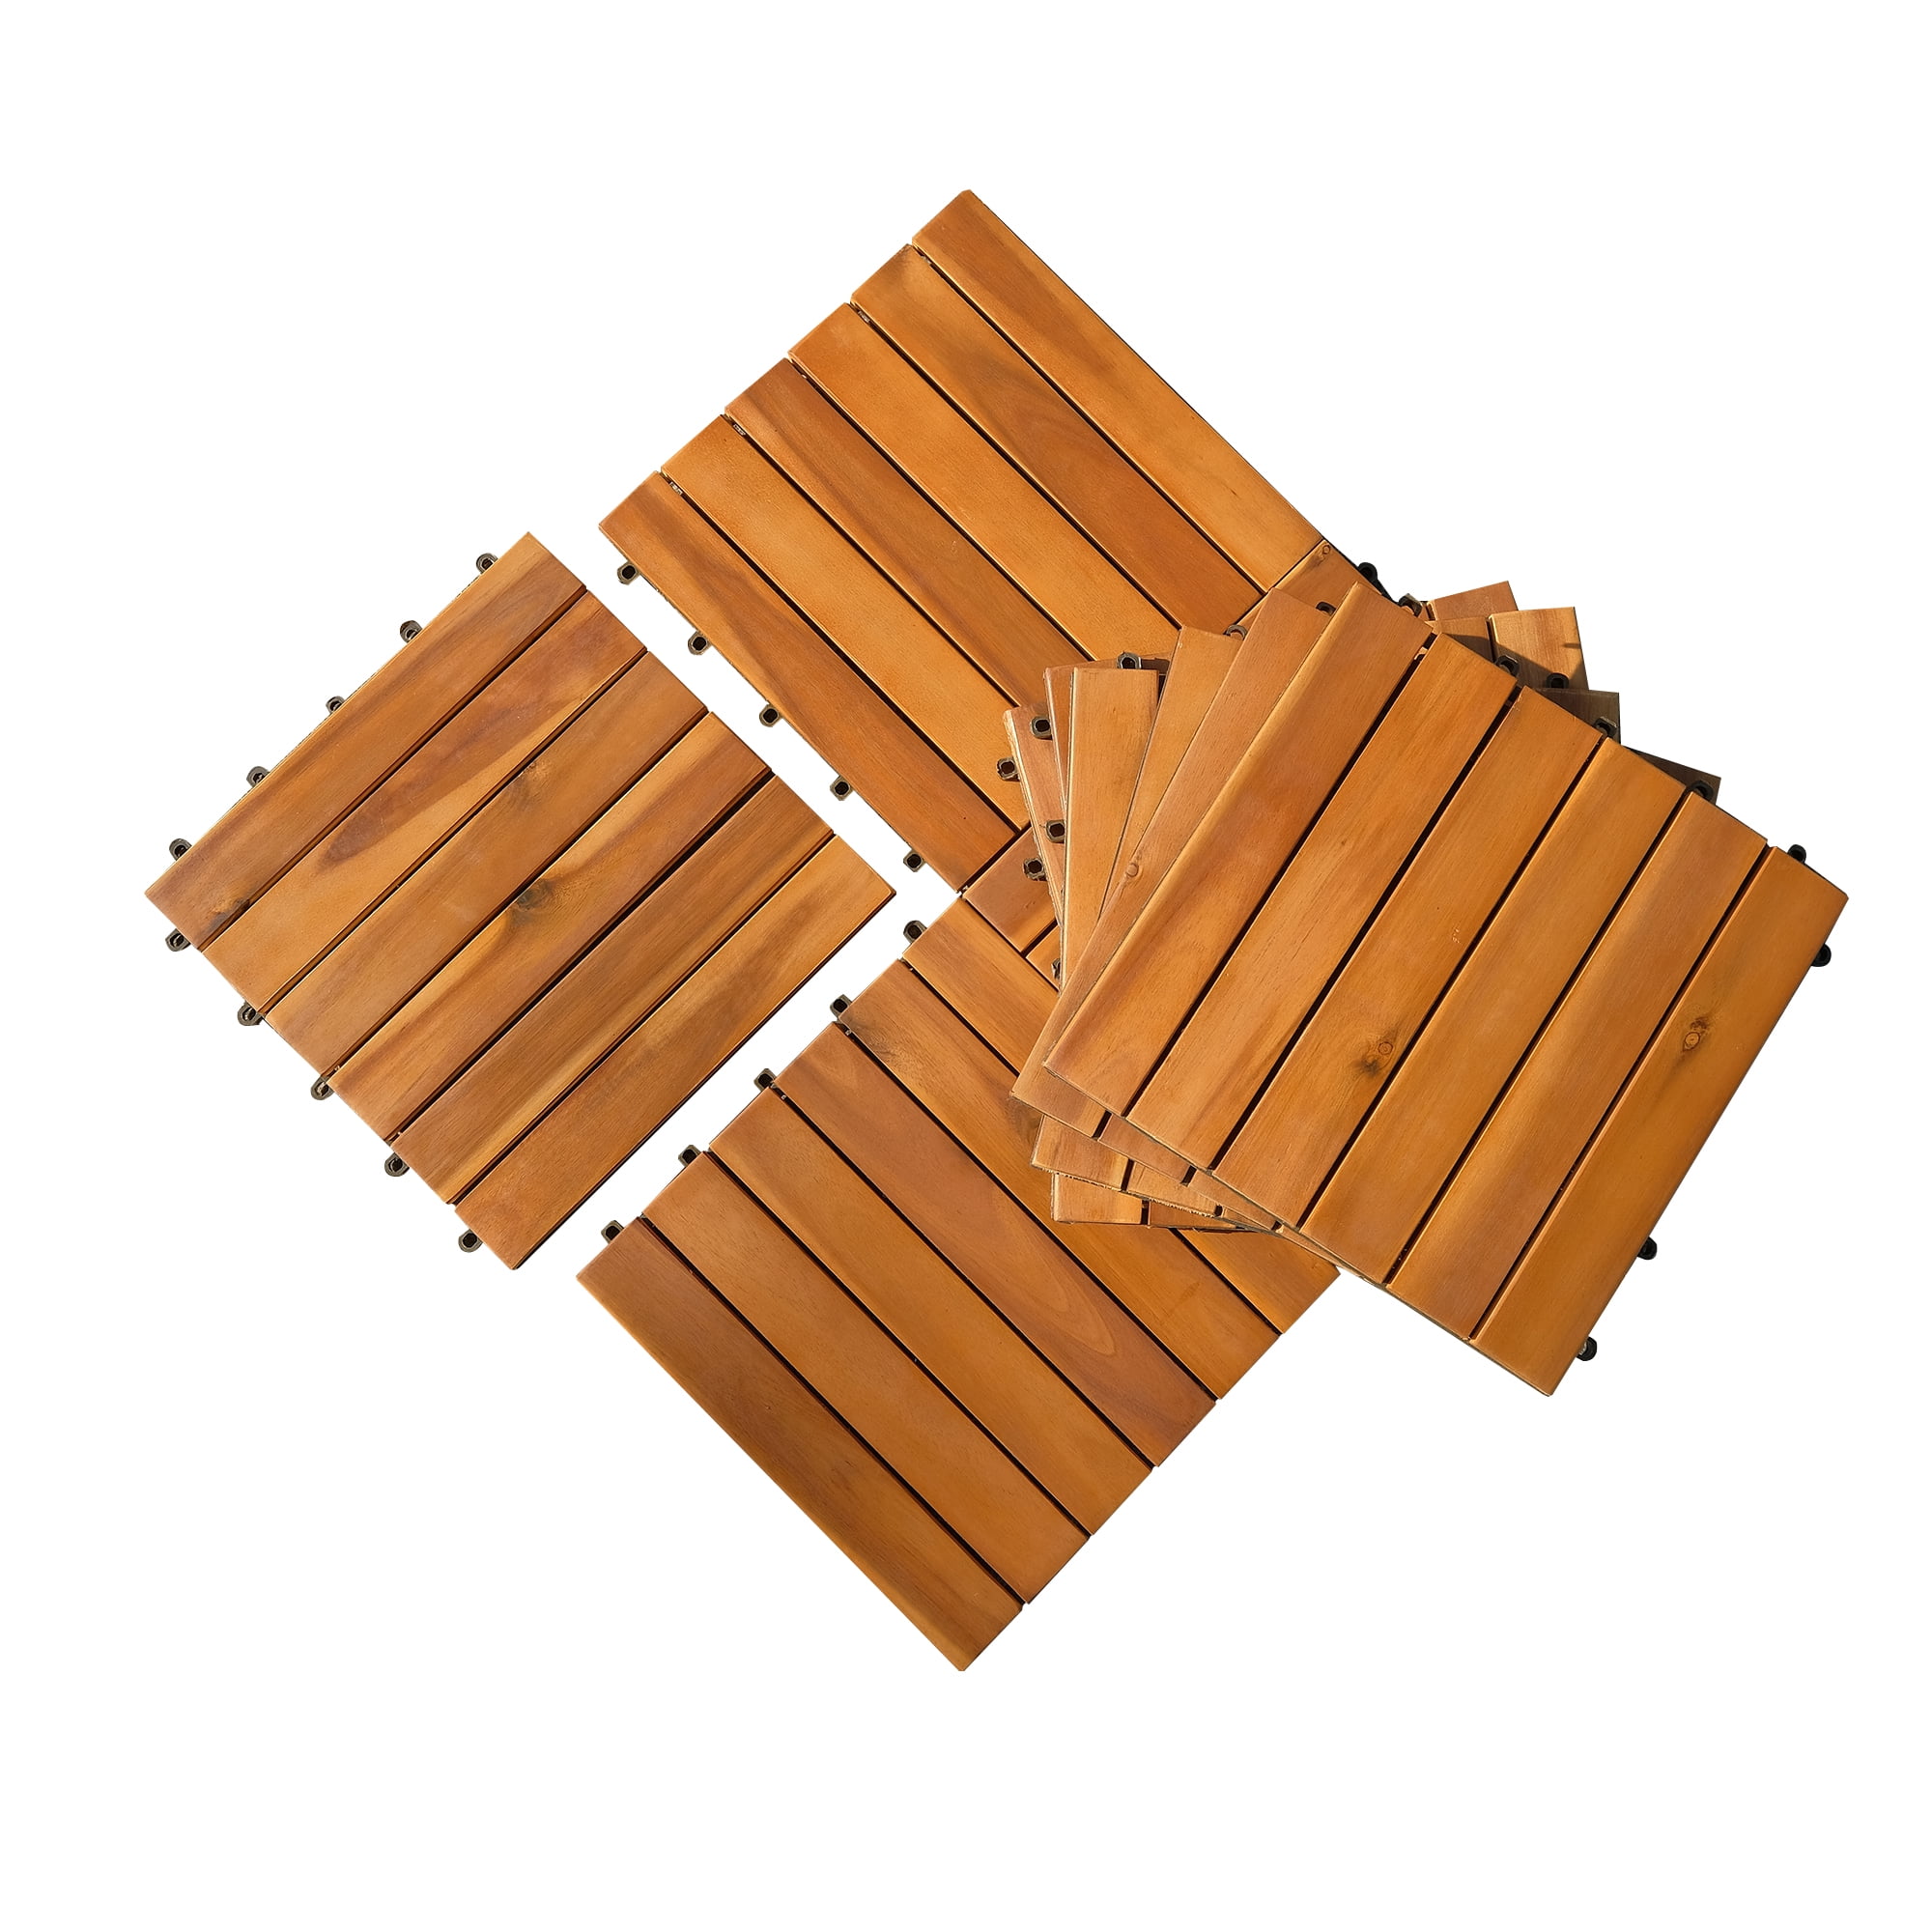 22 sq. ft Pack of 22 Pandahome Patio Pavers Tiles 12x12 | Coffee Wood Grain Four Slat Wood Plastic Composite Interlocking Floor Decking Tiles Water Resistant Flooring Tiles Indoor Outdoor